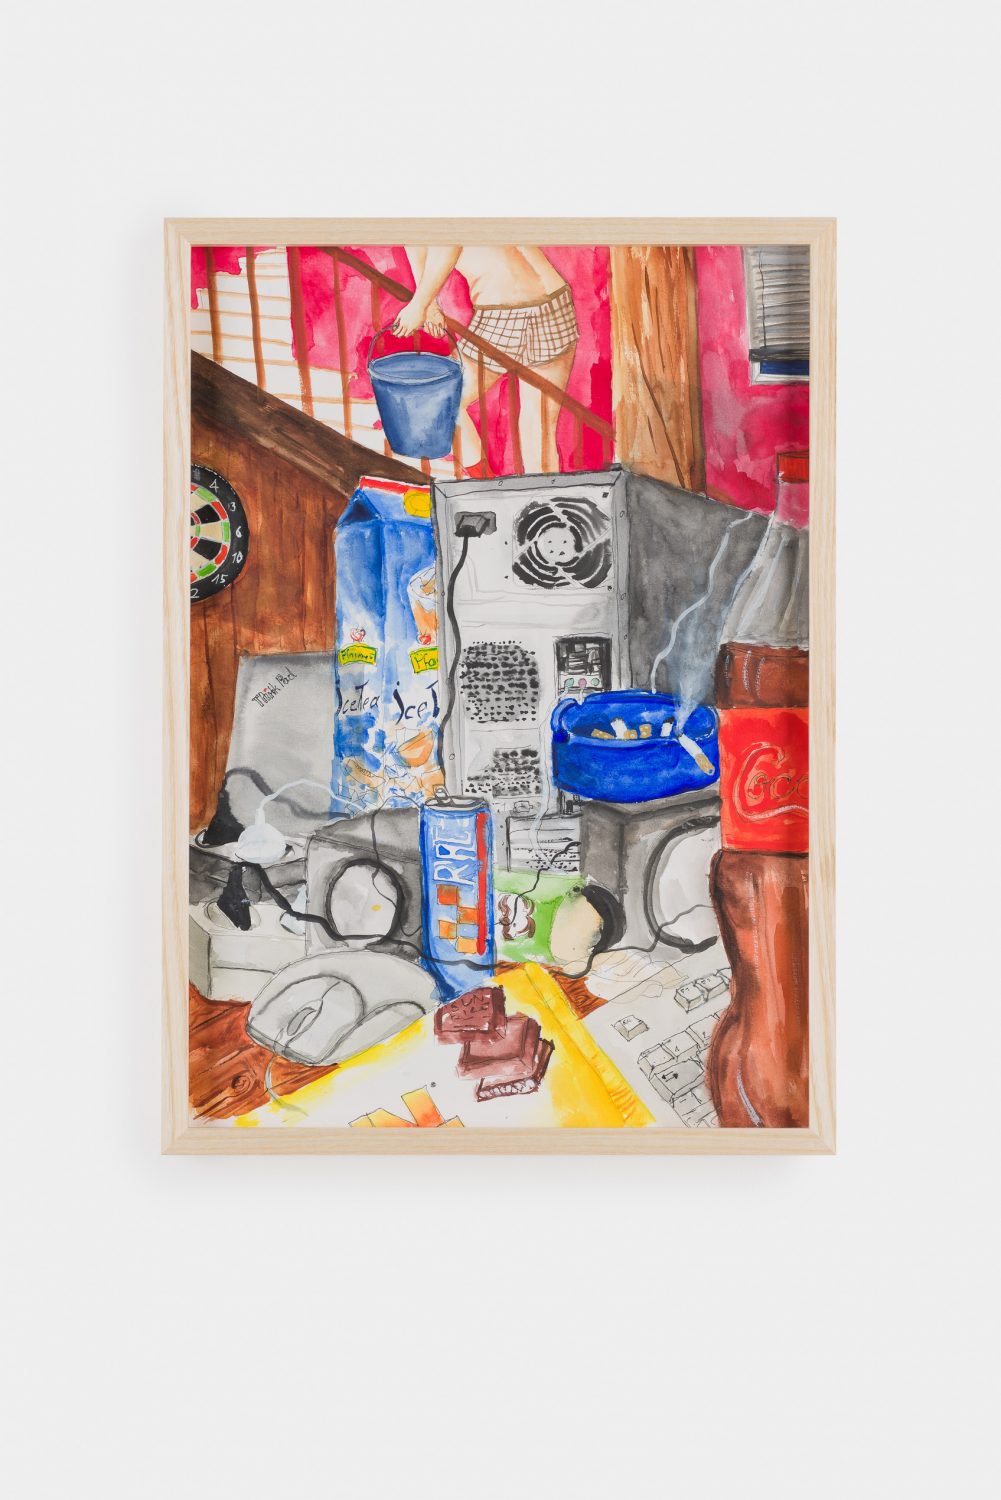 Matthias NogglerCoD 2, 2018Watercolor and pencil on paper44.1 x 31.8 cm